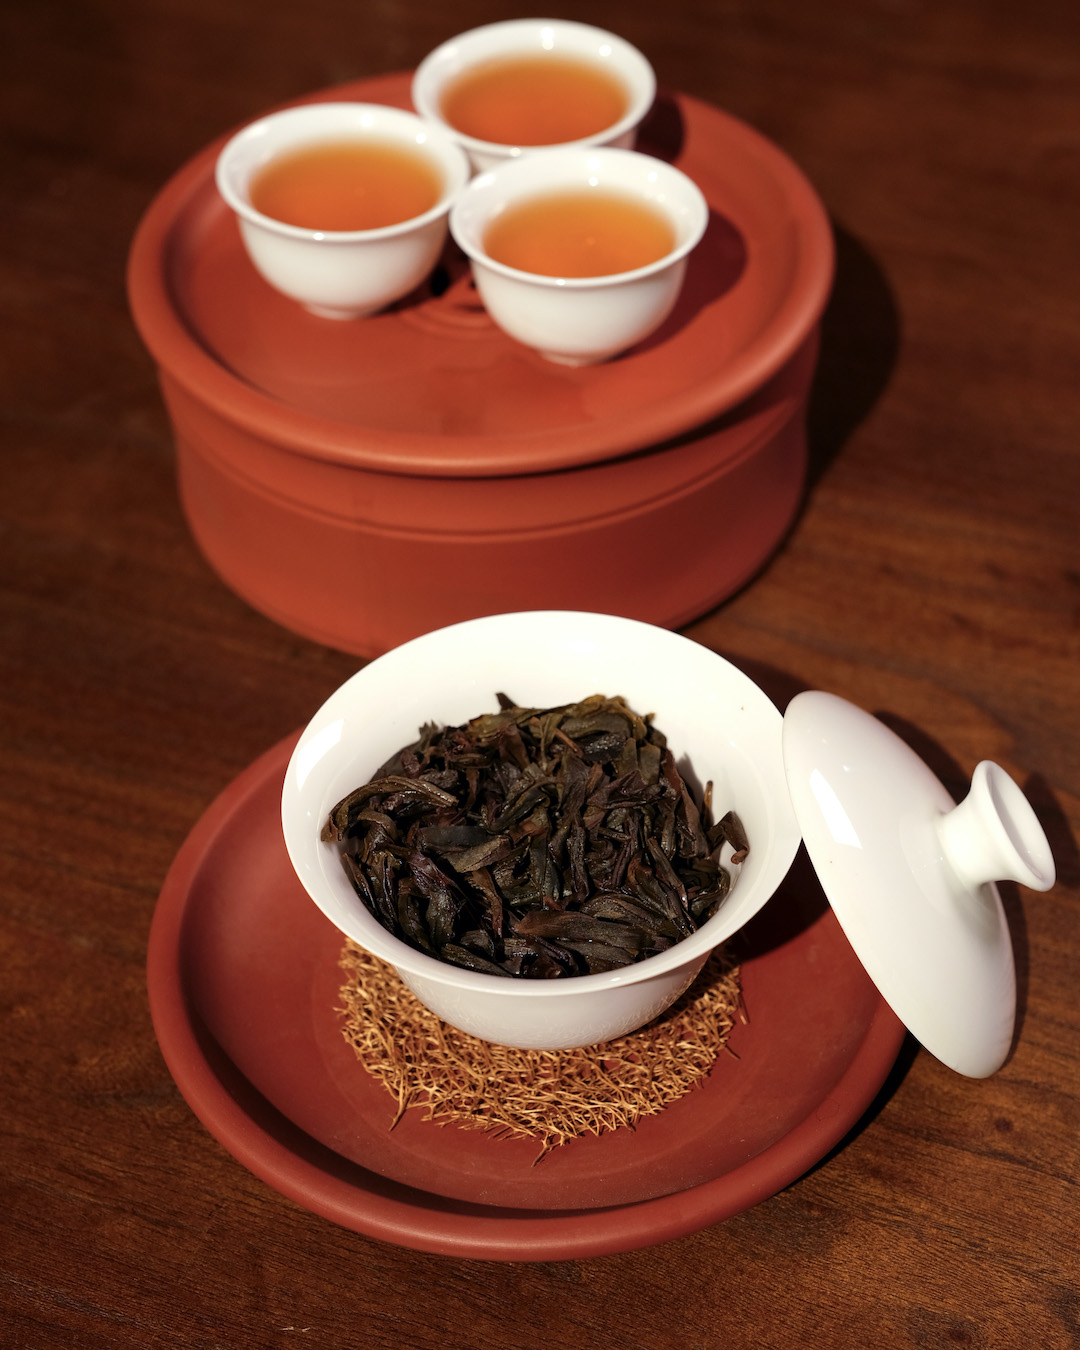 Brewing gongfu tea in a gaiwan with three cups.